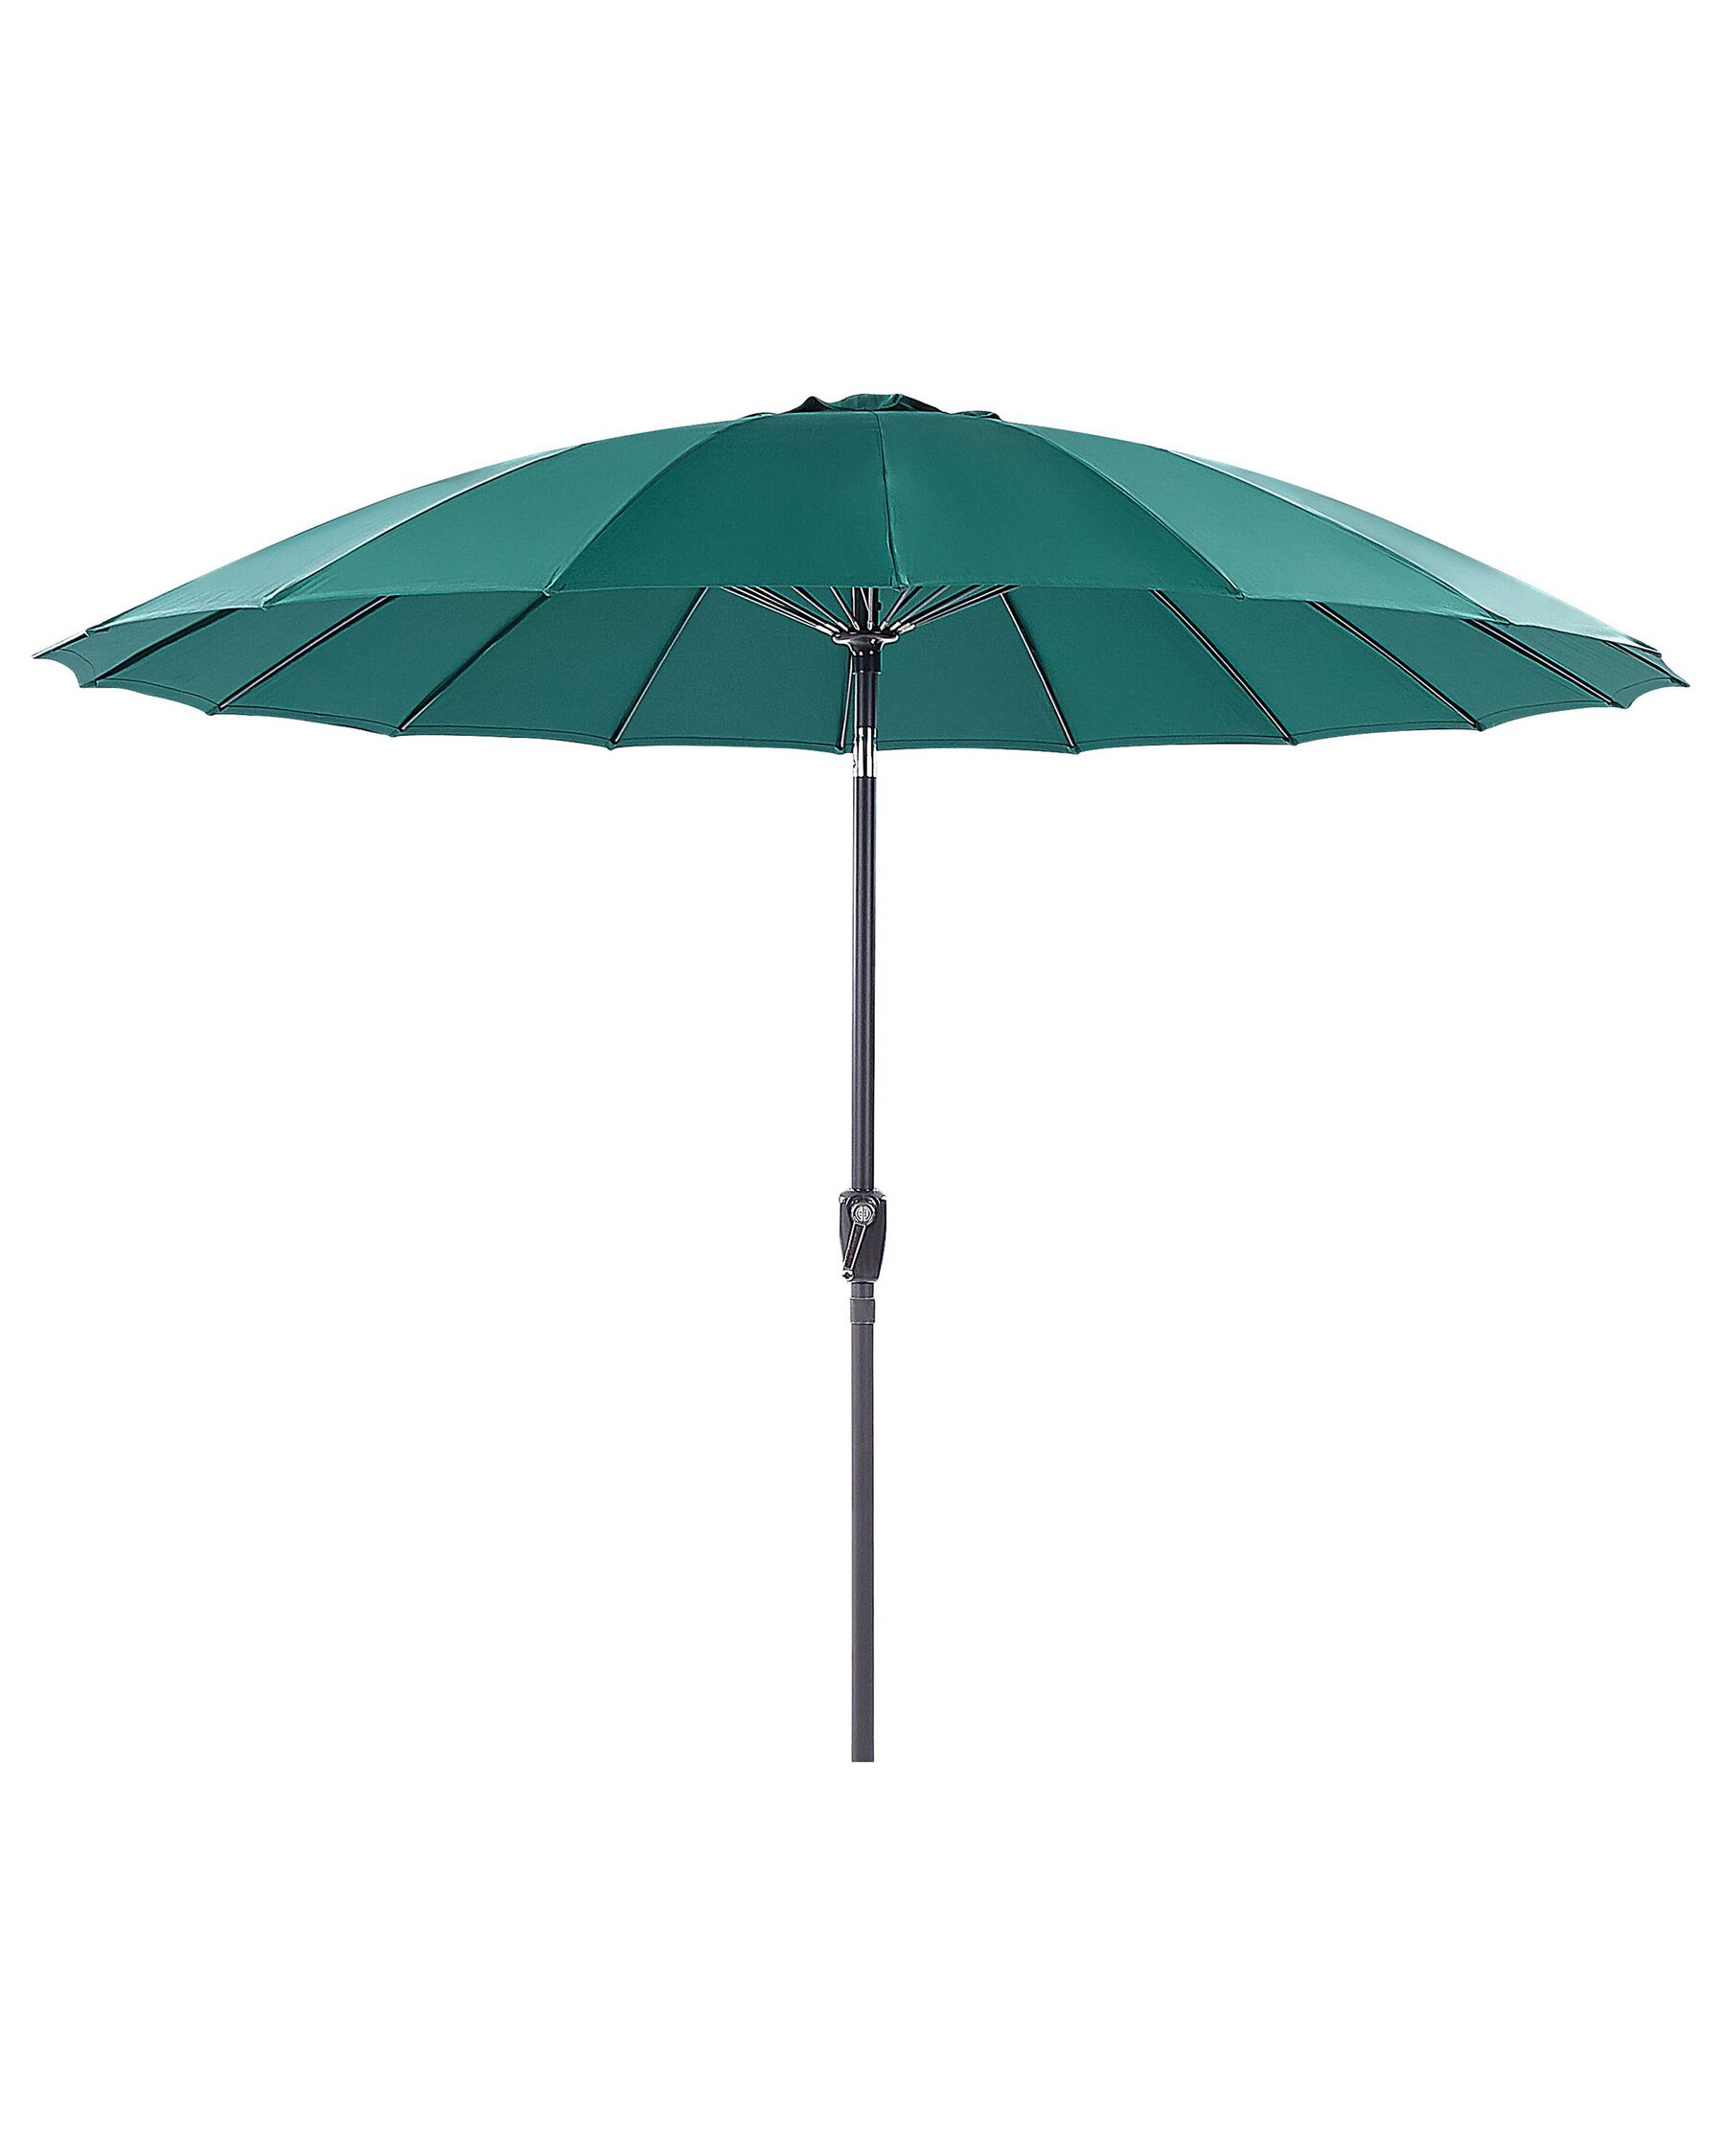 Parasol de jardin ⌀ 2.55 m vert émeraude BAIA_829163